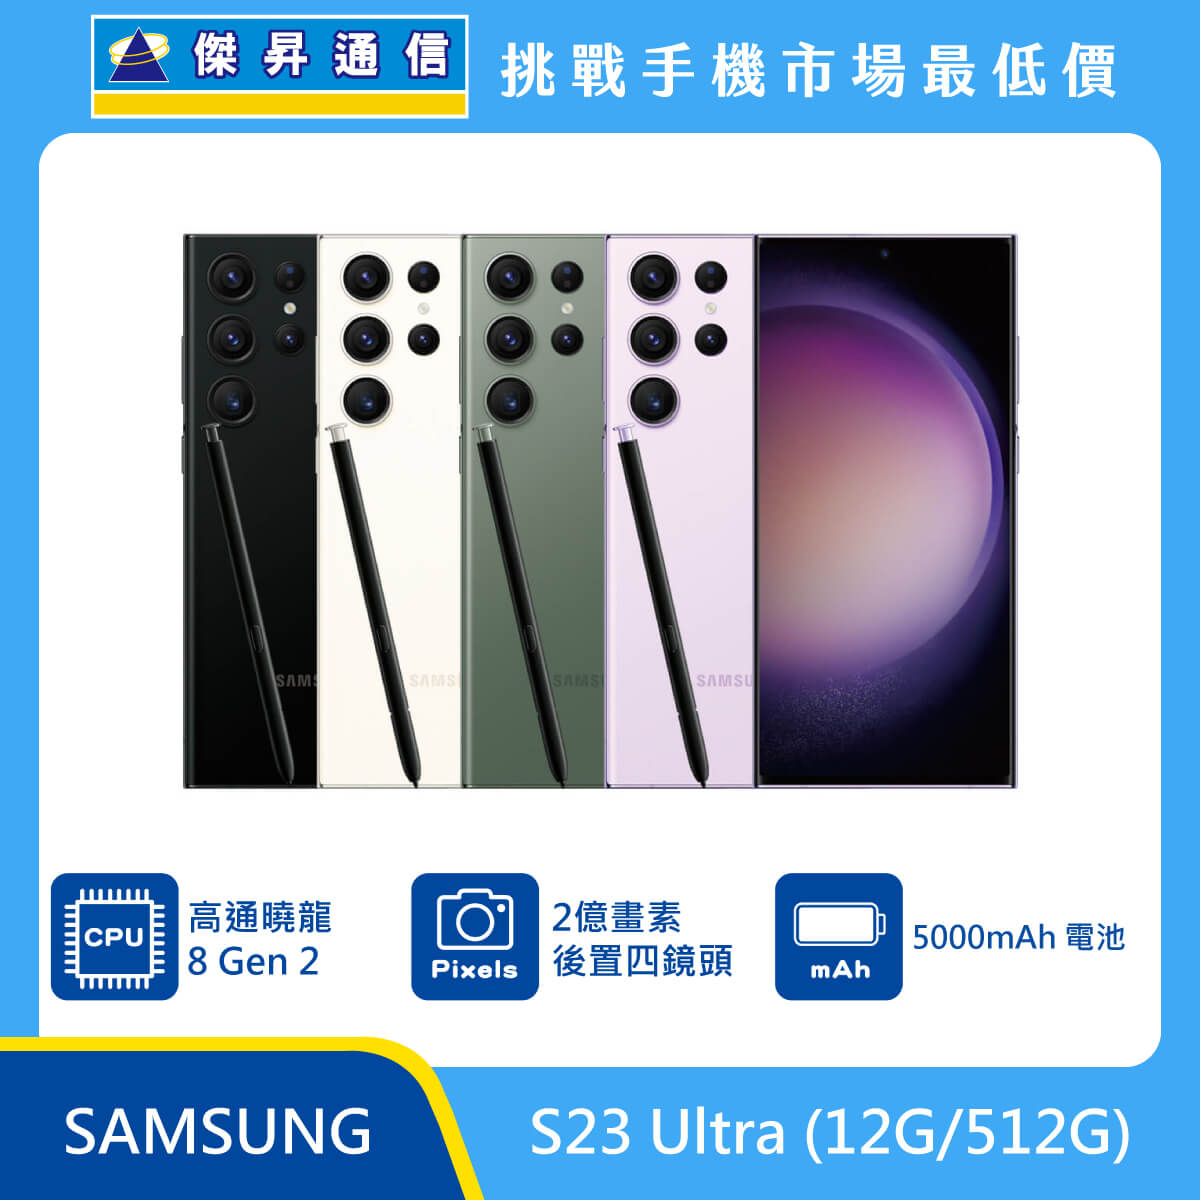 SAMSUNG S23 Ultra (12G/512G)